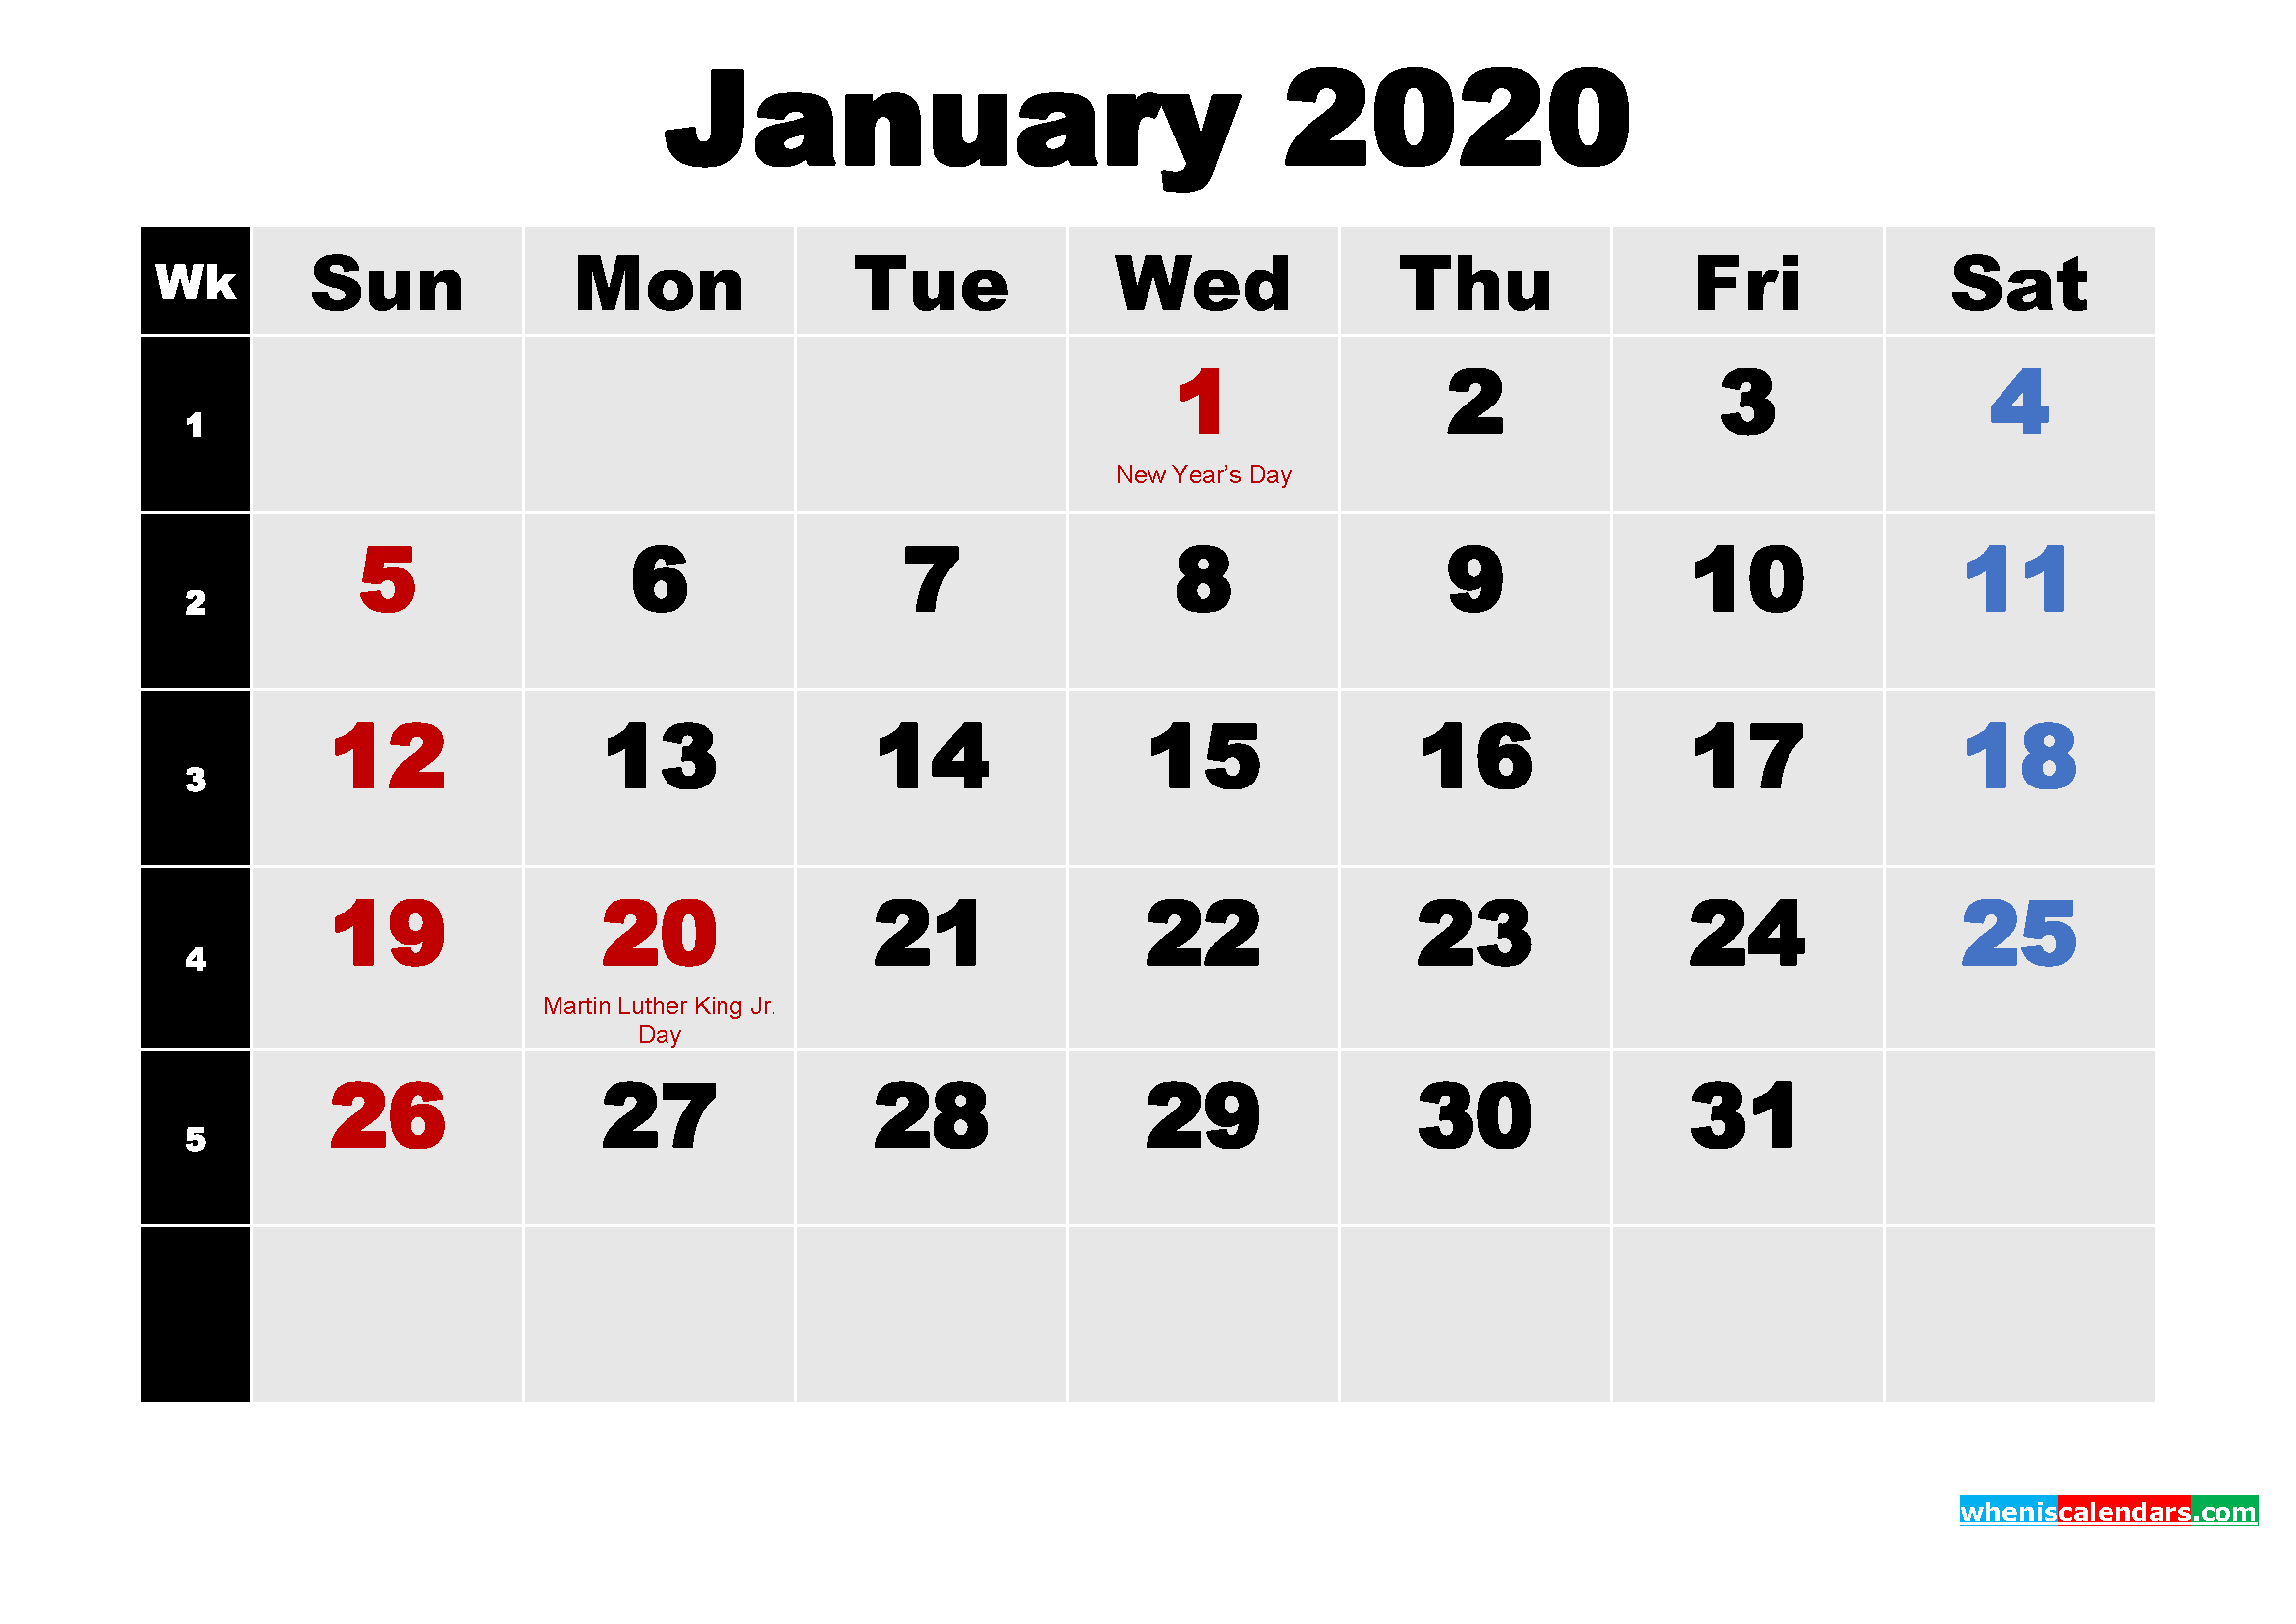 January 2020 Calendar With Holidays Wallpaper - February Calendar With Holidays 2020 - HD Wallpaper 